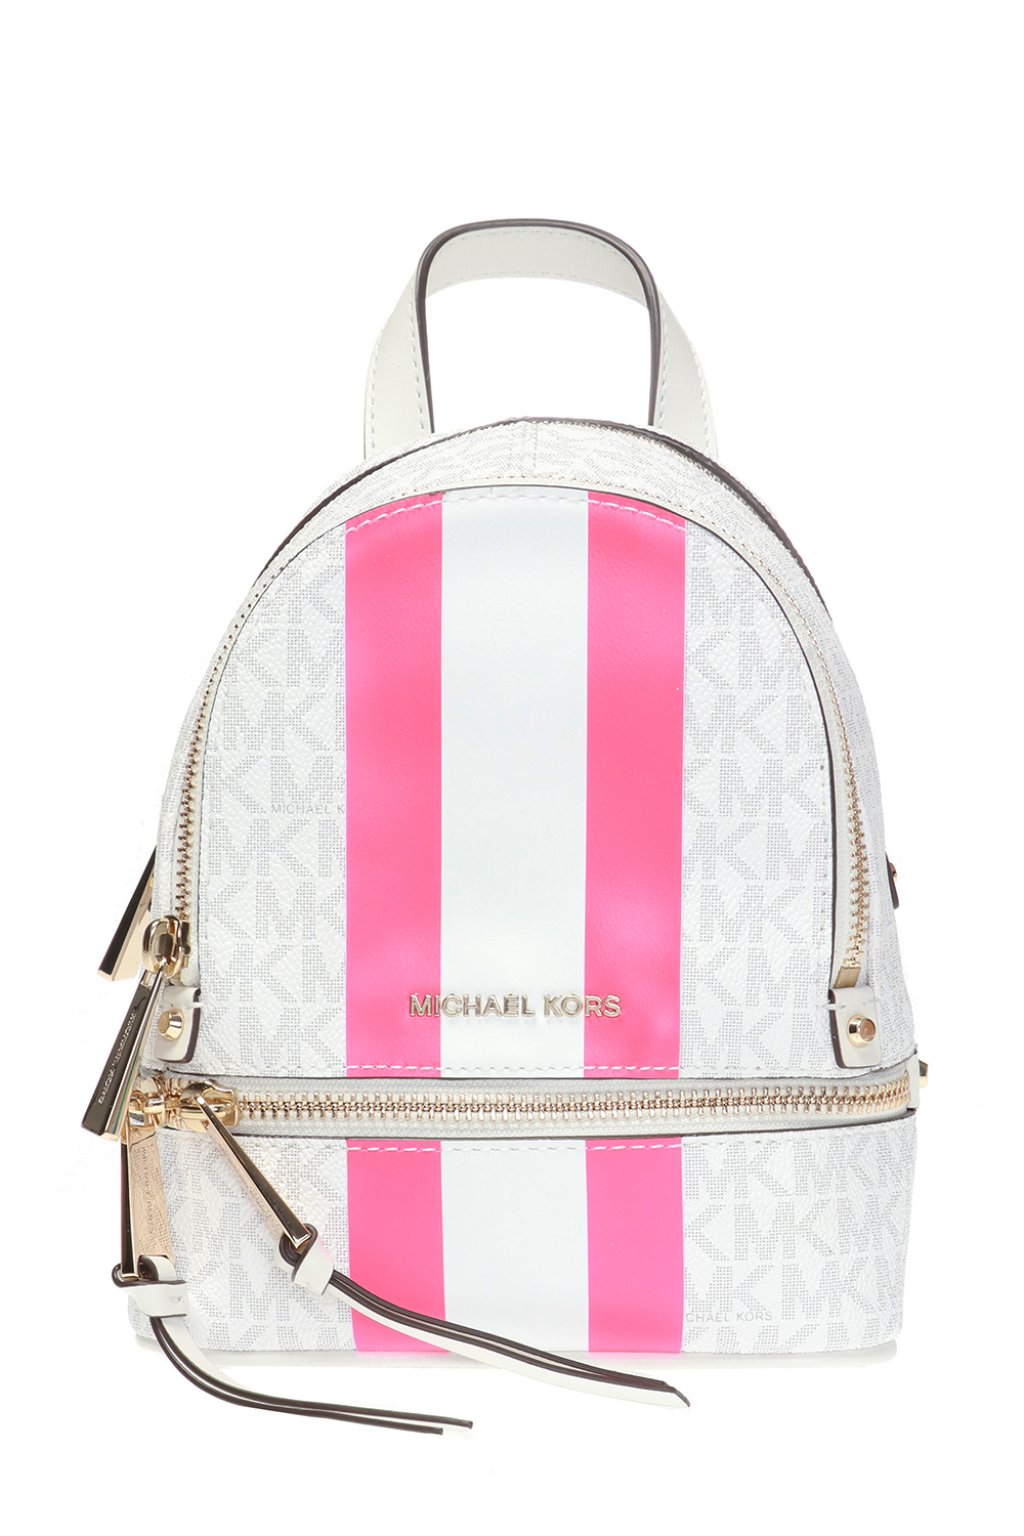 michael kors rhea embellished backpack